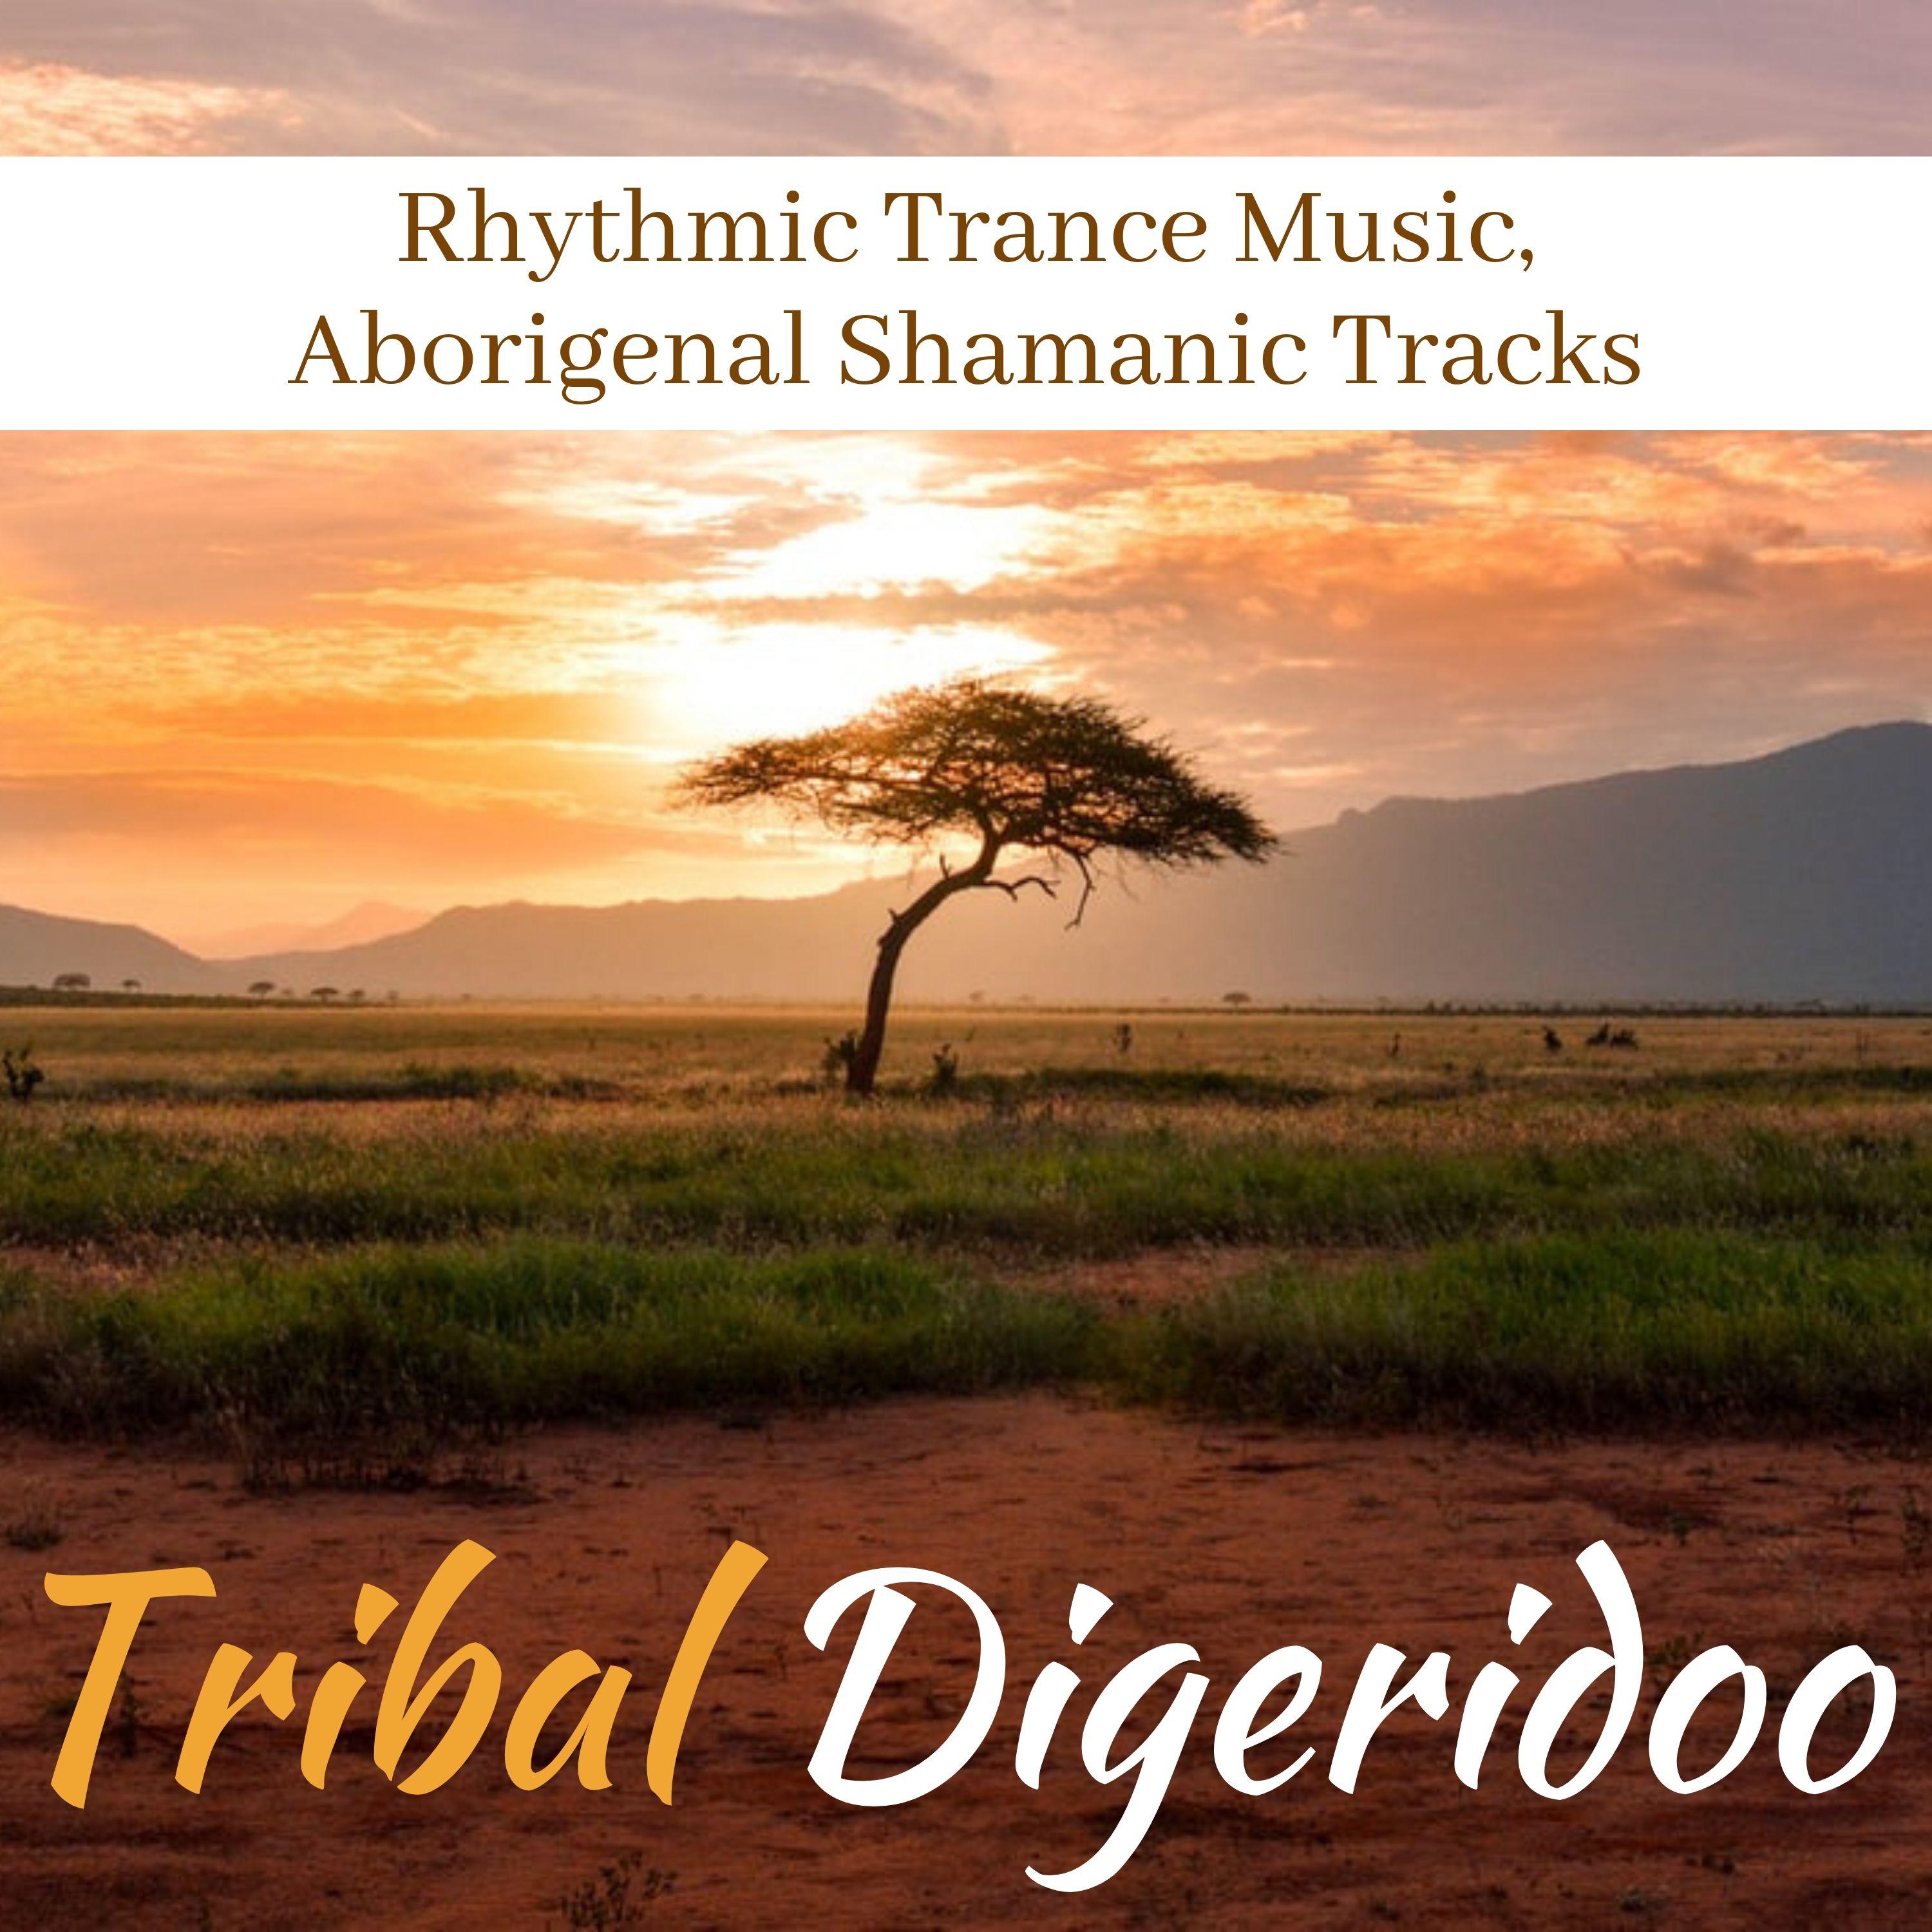 Aborigenal Shamanic Tracks